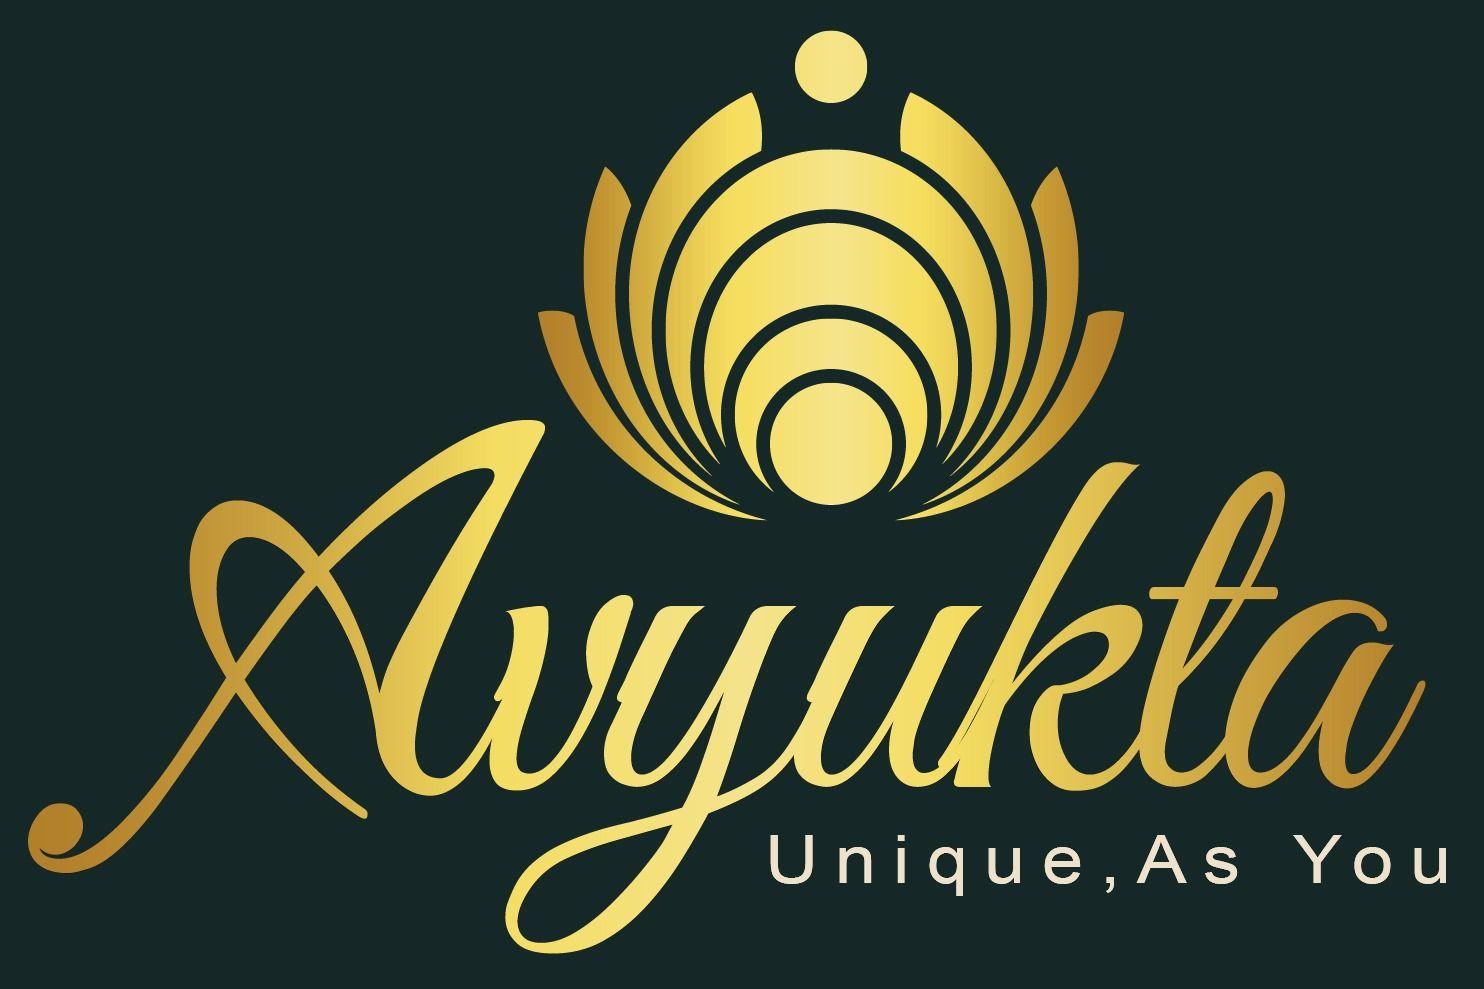 M/s Avyukta Enterprises